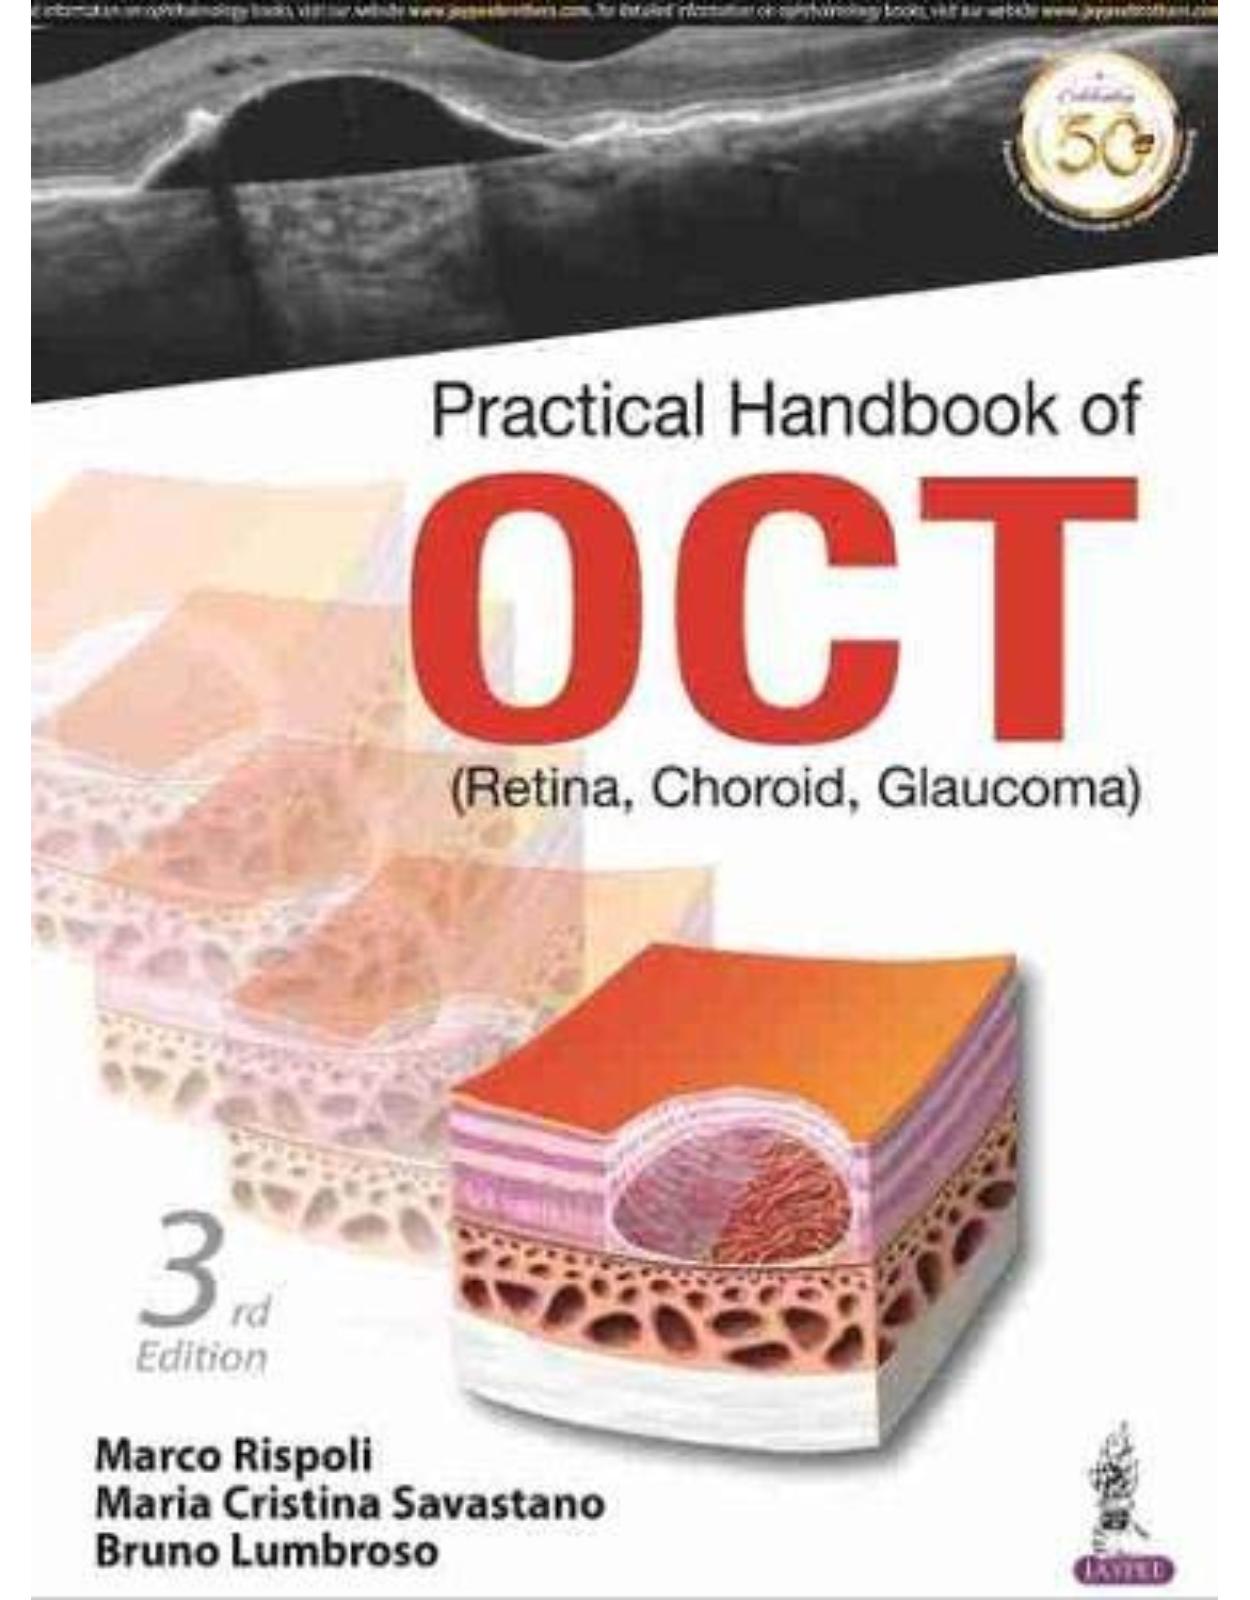 Practical Handbook of OCT: (Retina, Choroid, Glaucoma) 